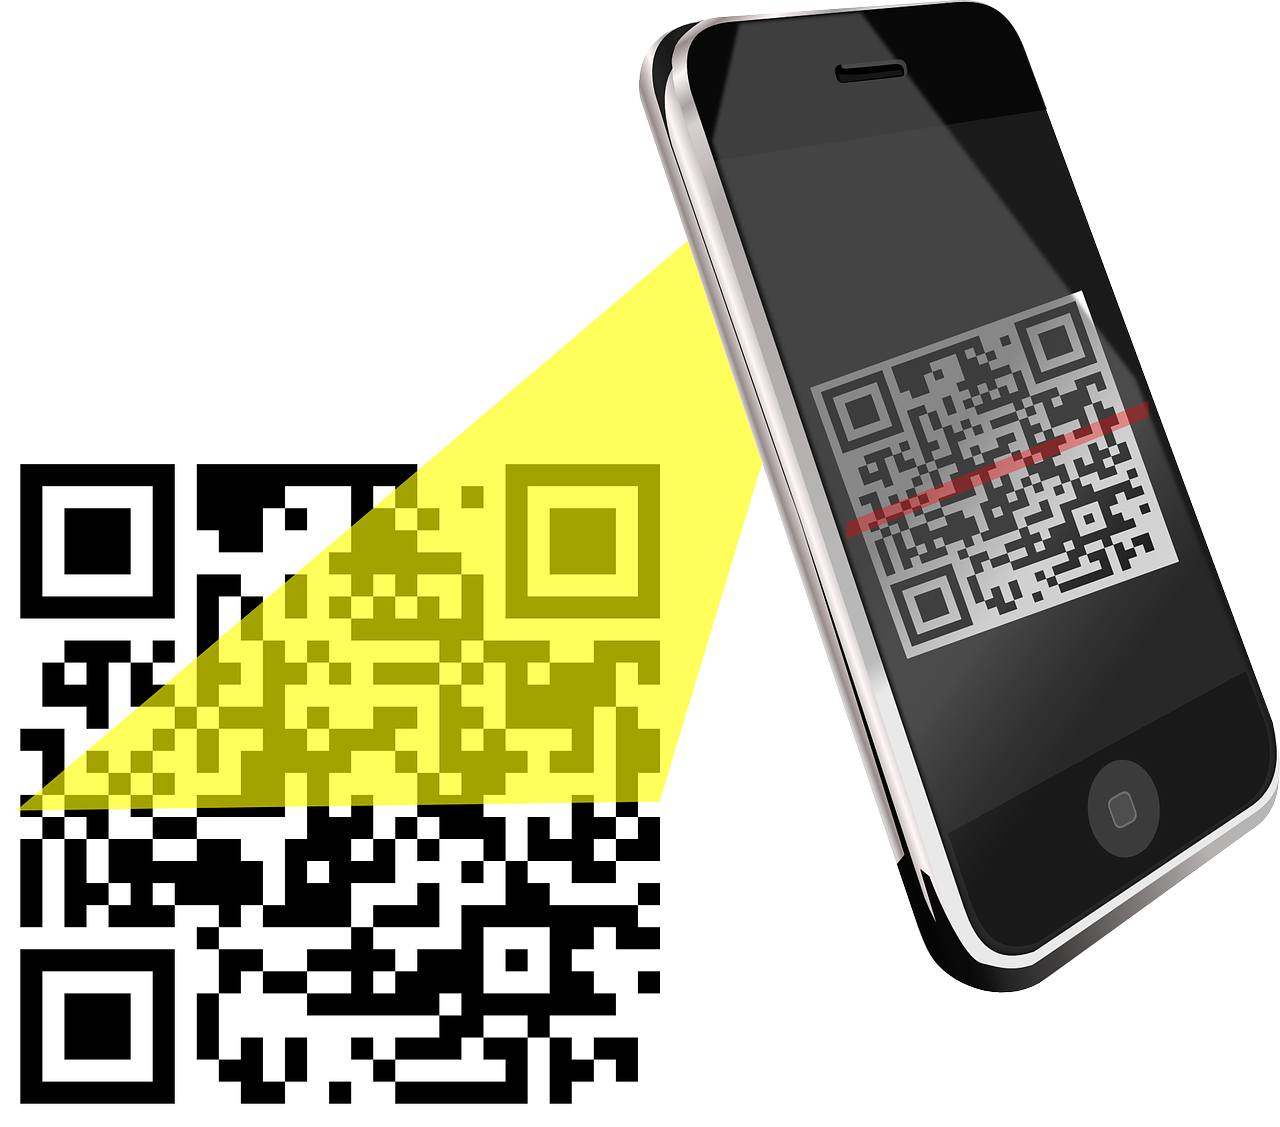 Мини qr код. QR код. Смартфон QR код. Сканировать QR код. Иллюстрация смартфона с QR кодом.